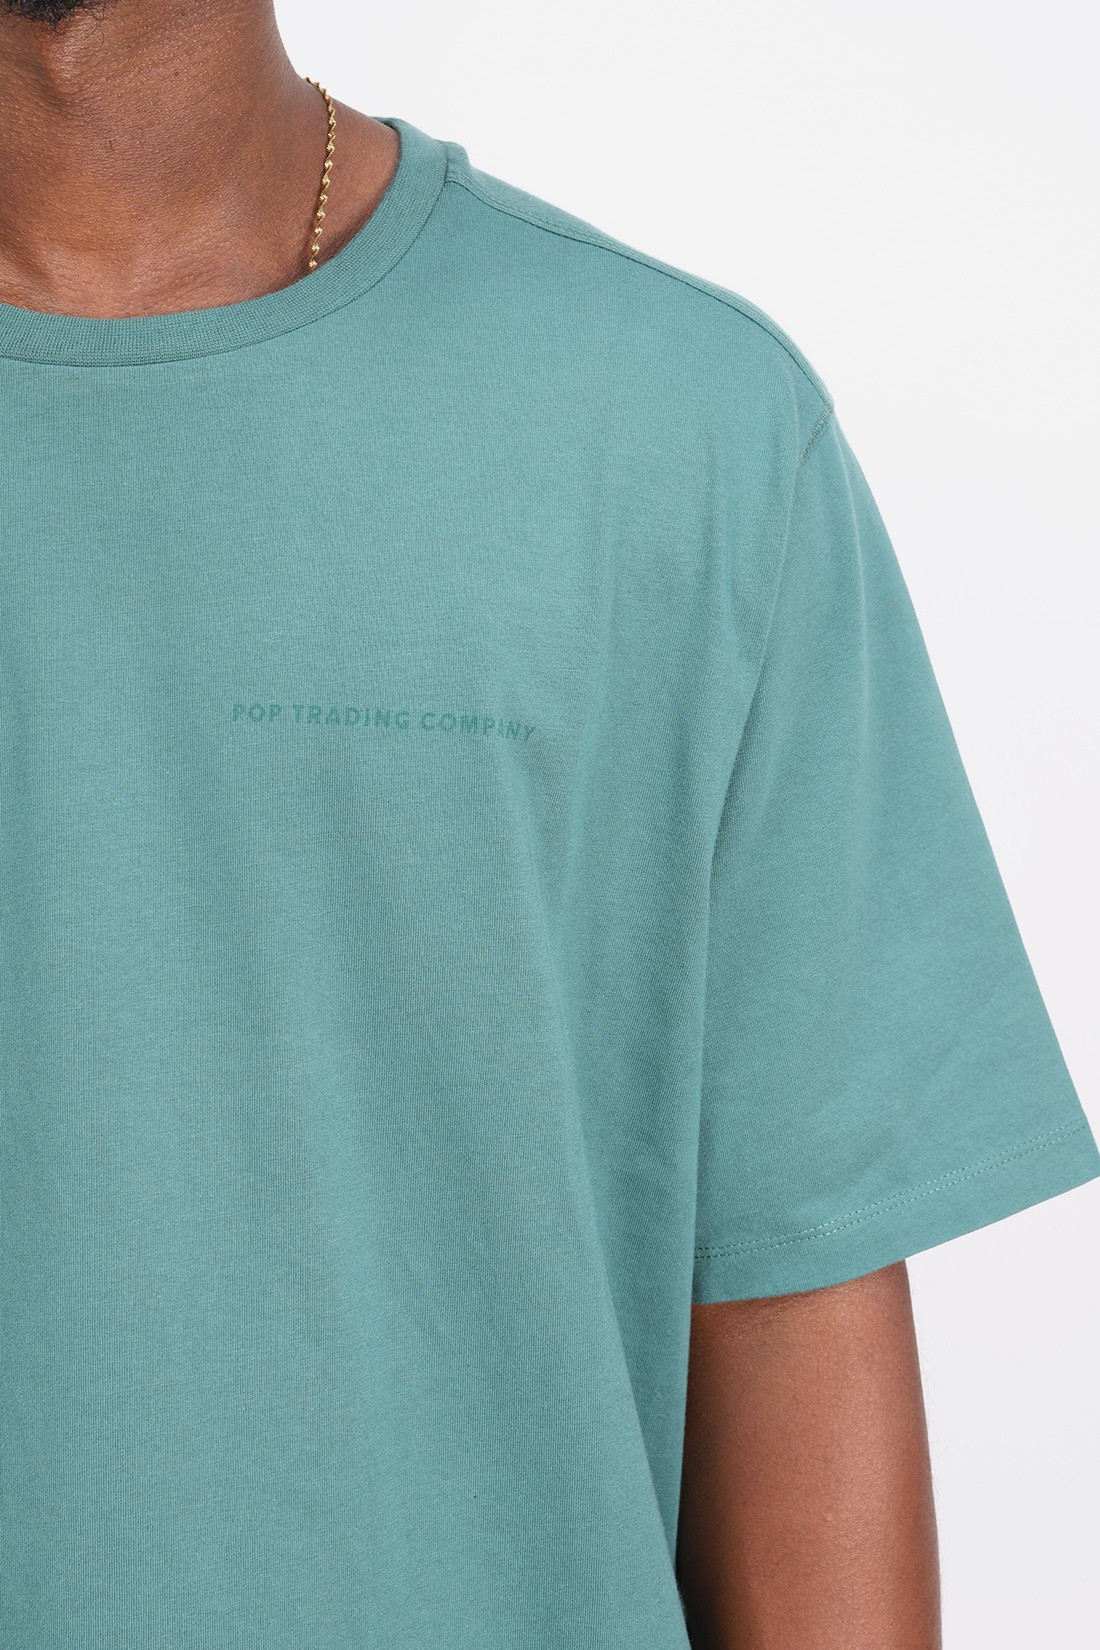 POP TRADING COMPANY / Logo t-shirt Bistro green